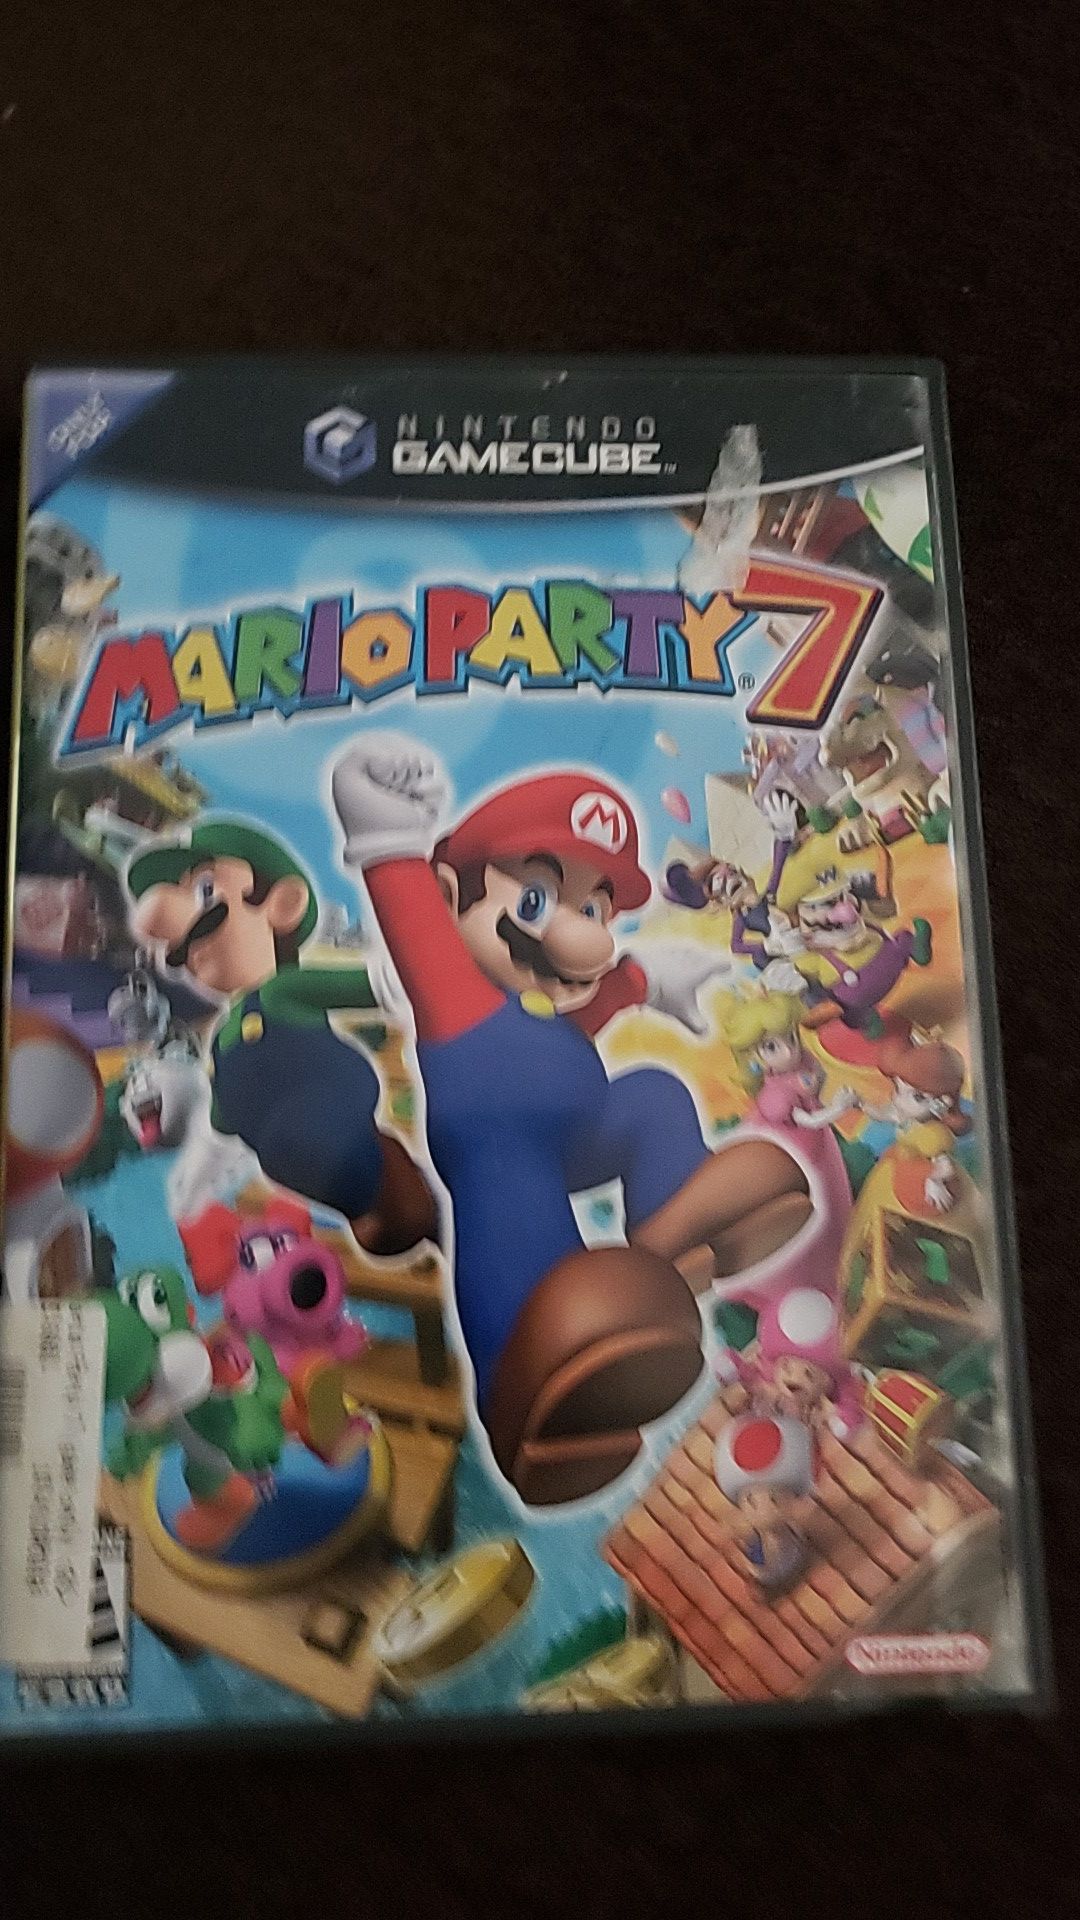 Game Cube Mario Party 7